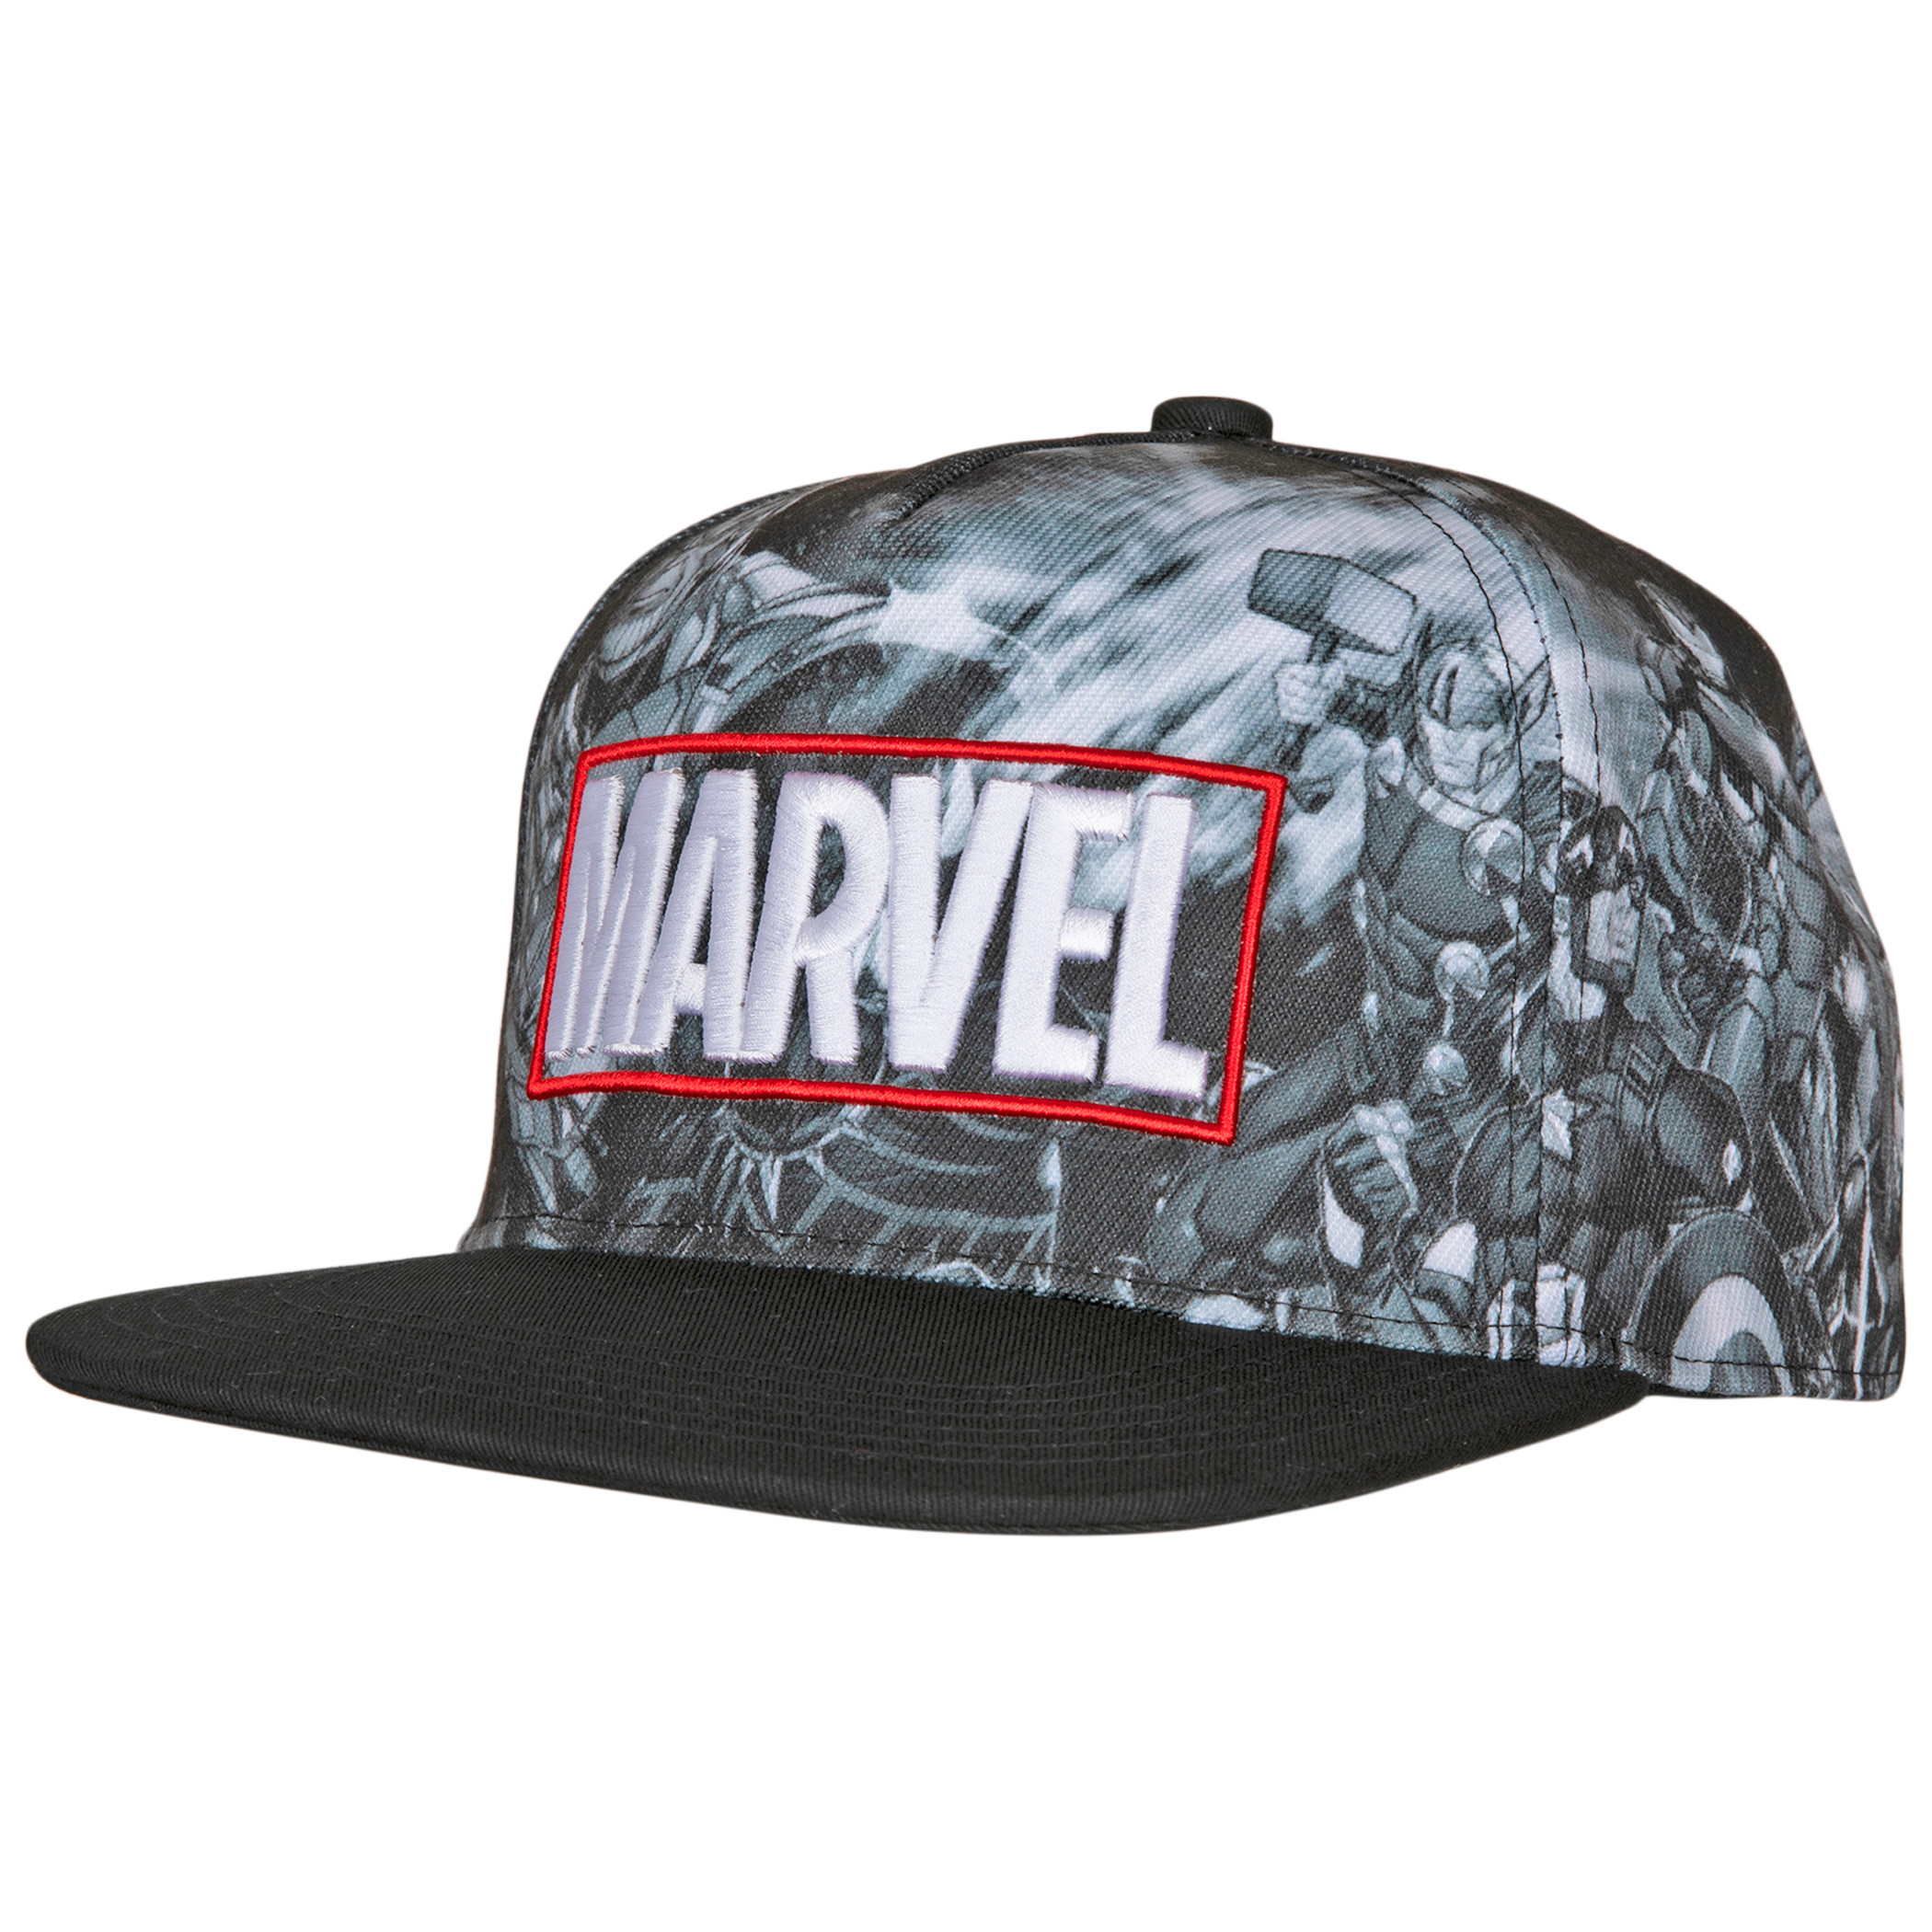 Marvel Avengers Characters Sublimated Panels Flat Brim Adjustable Hat